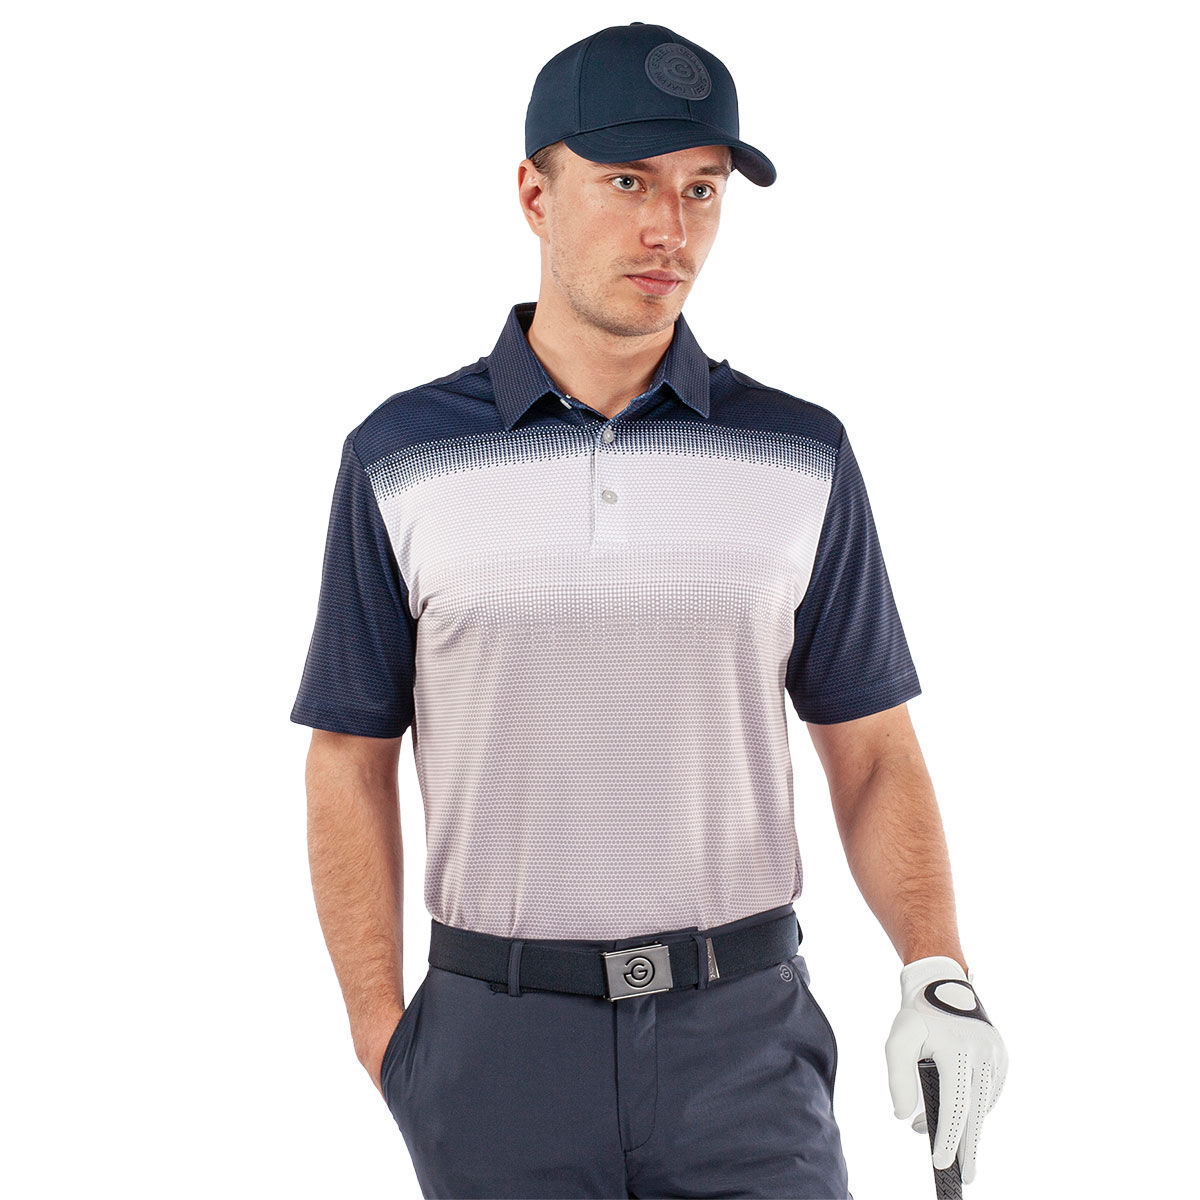 Galvin Green Men’s Mo Golf Polo Shirt, Mens, Cool grey/white, Medium | American Golf